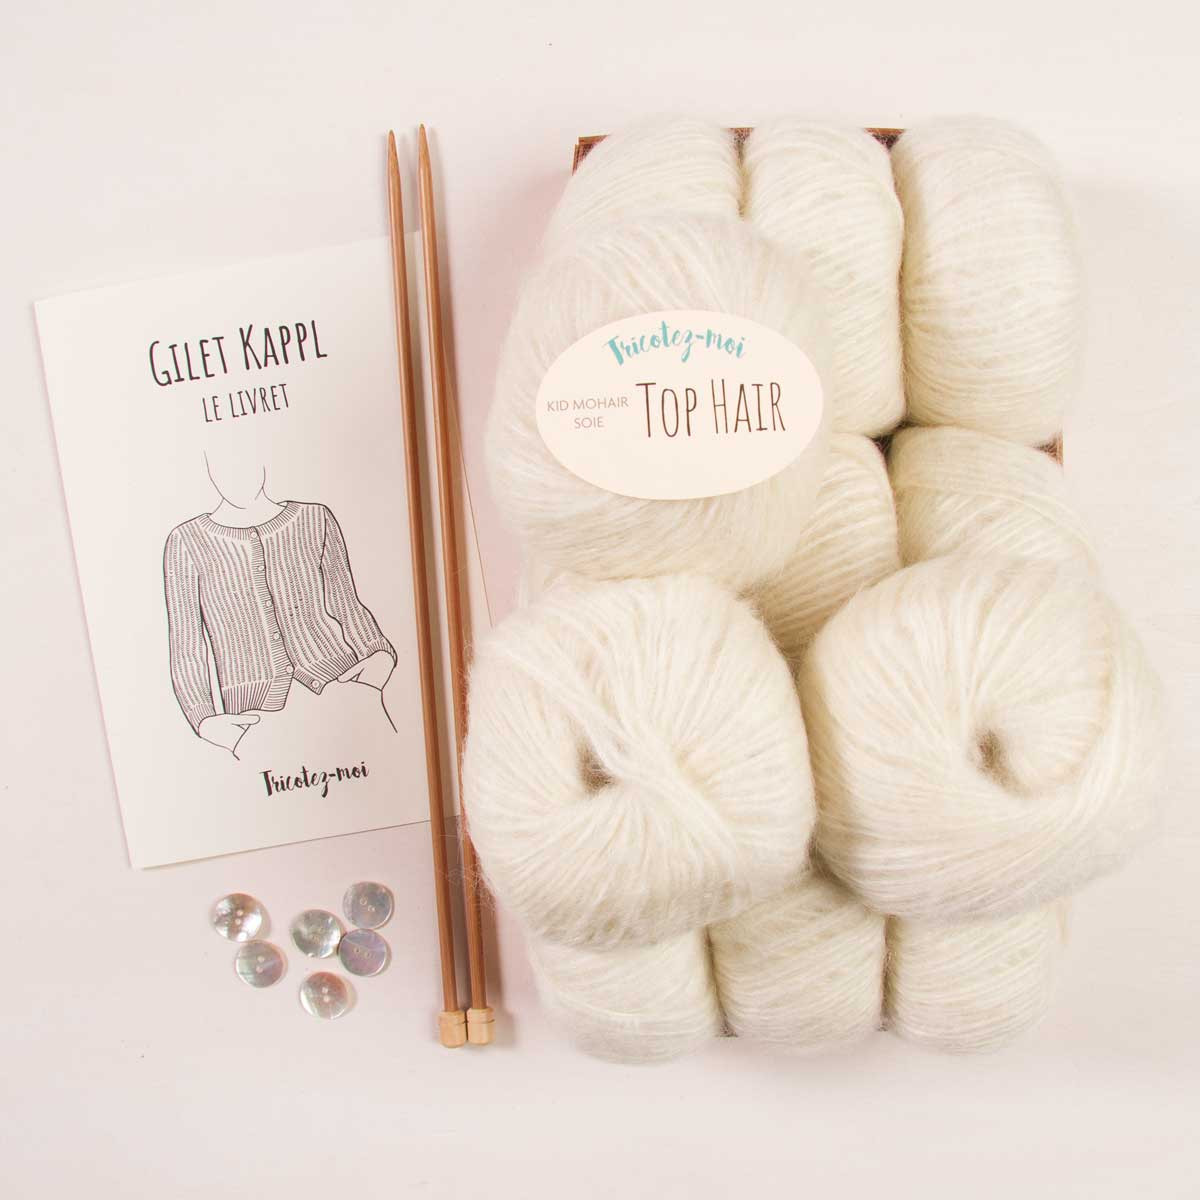 Kappl Cardigan Knitting kit